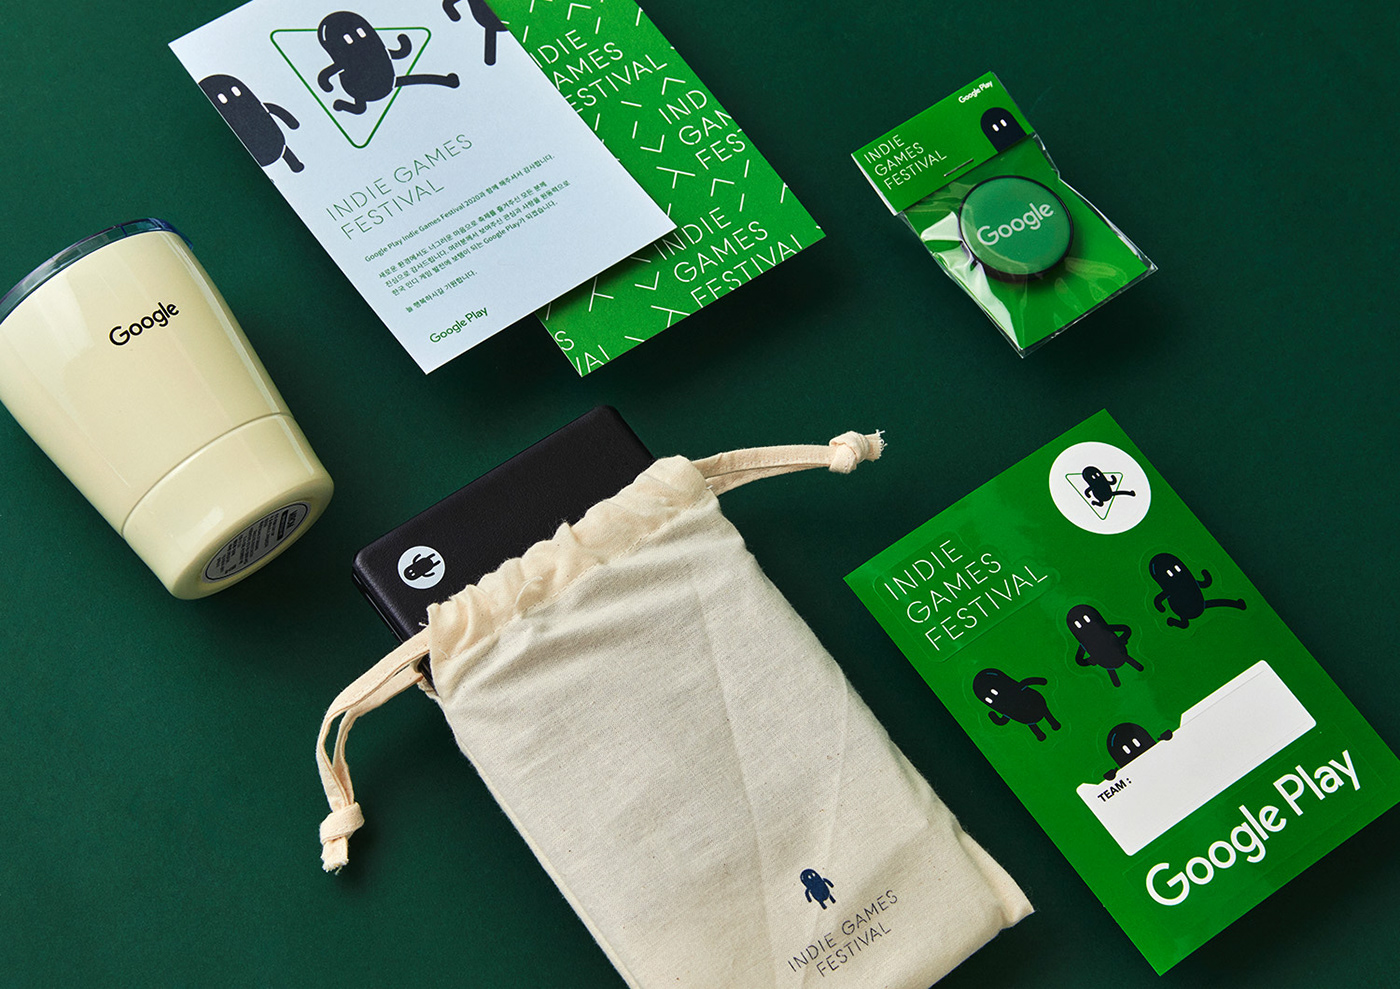 Bradning game Gamer google googleplay package gift kit Google Design material